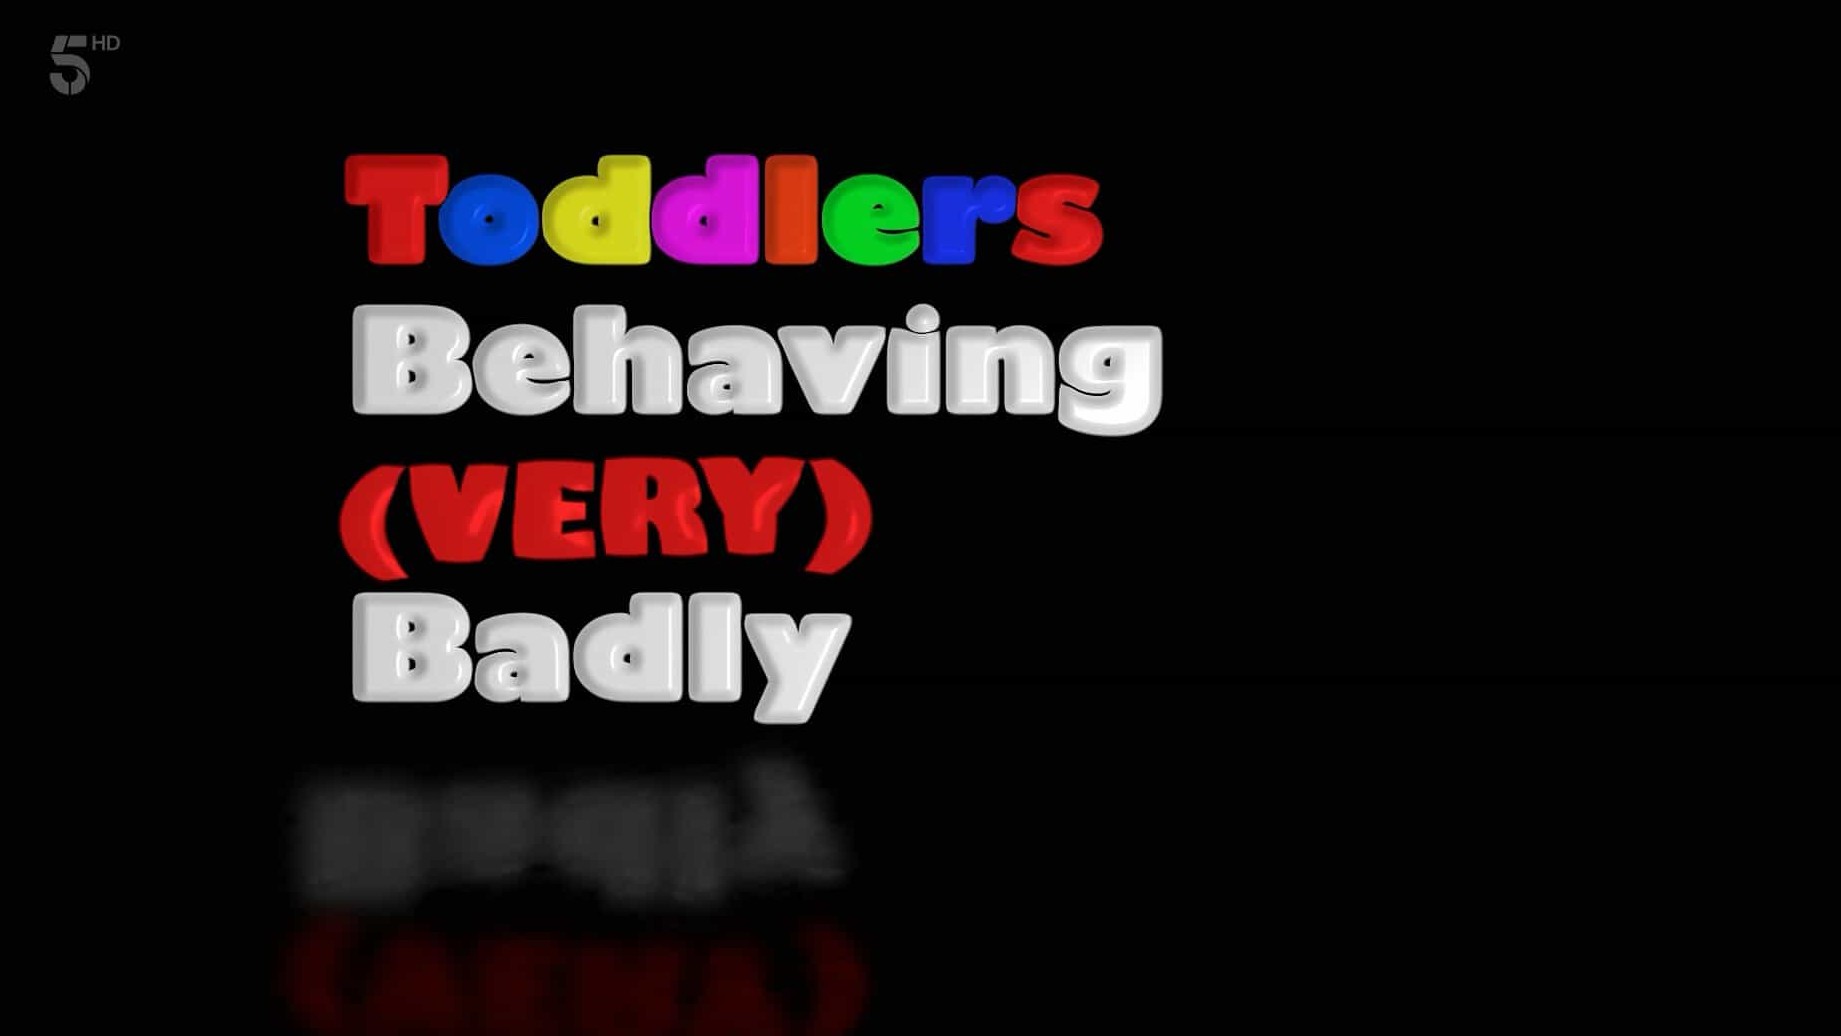 Ch5纪录片《幼儿的糟糕行为/幼儿表现（非常）糟糕 Toddlers Behaving Very Badly 2020》全3集 英语中英双字 1080P高清网盘下载